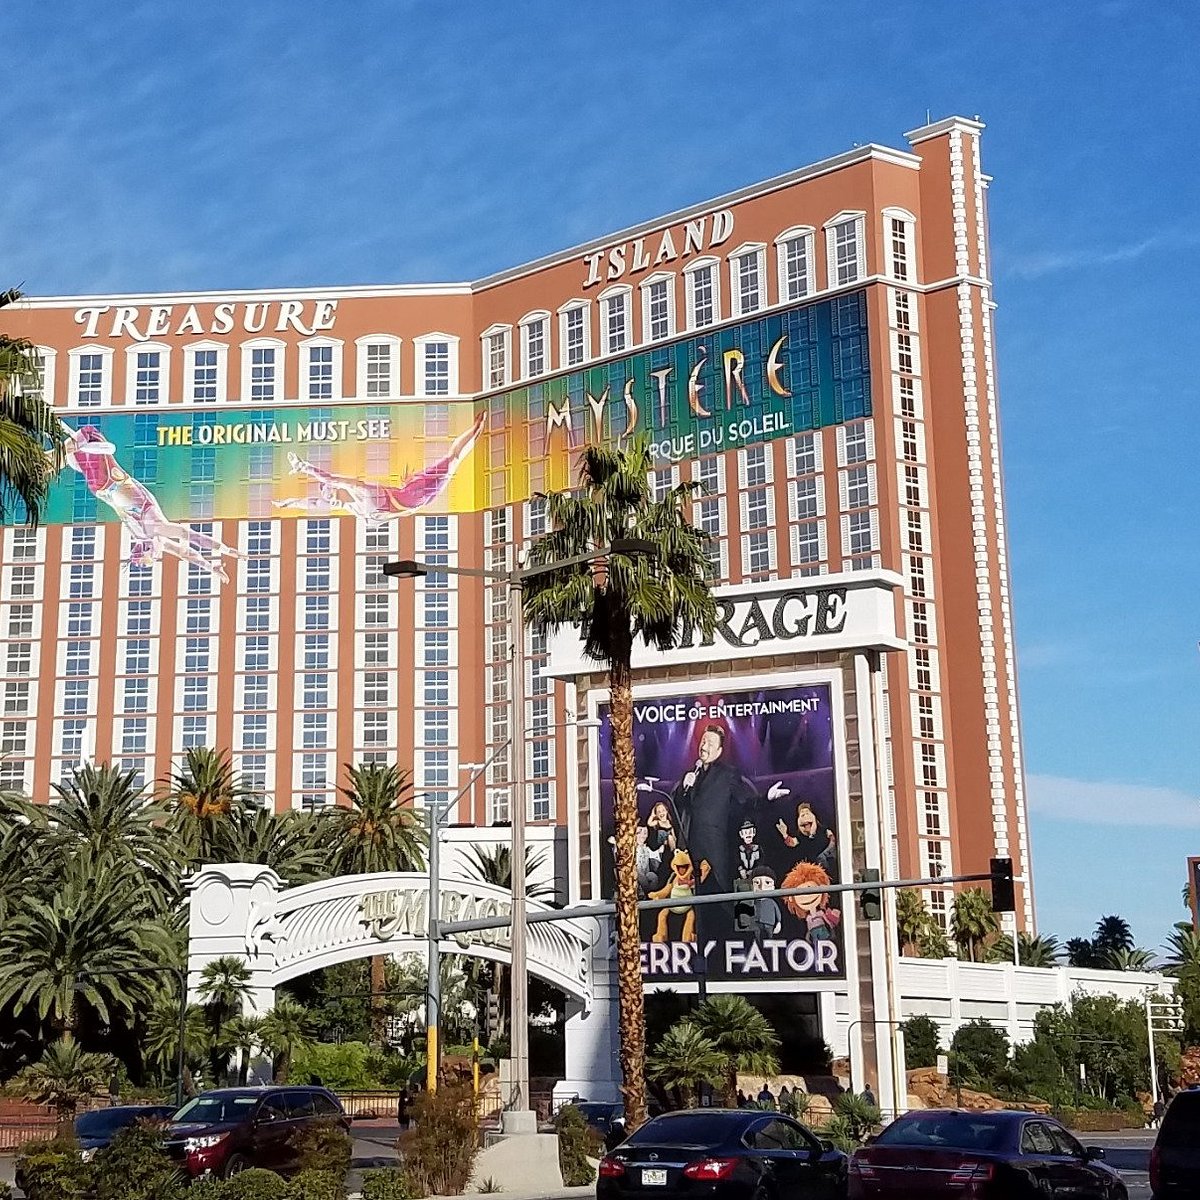 Treasure Island opens its new sportsbook on the Strip - Eater Vegas